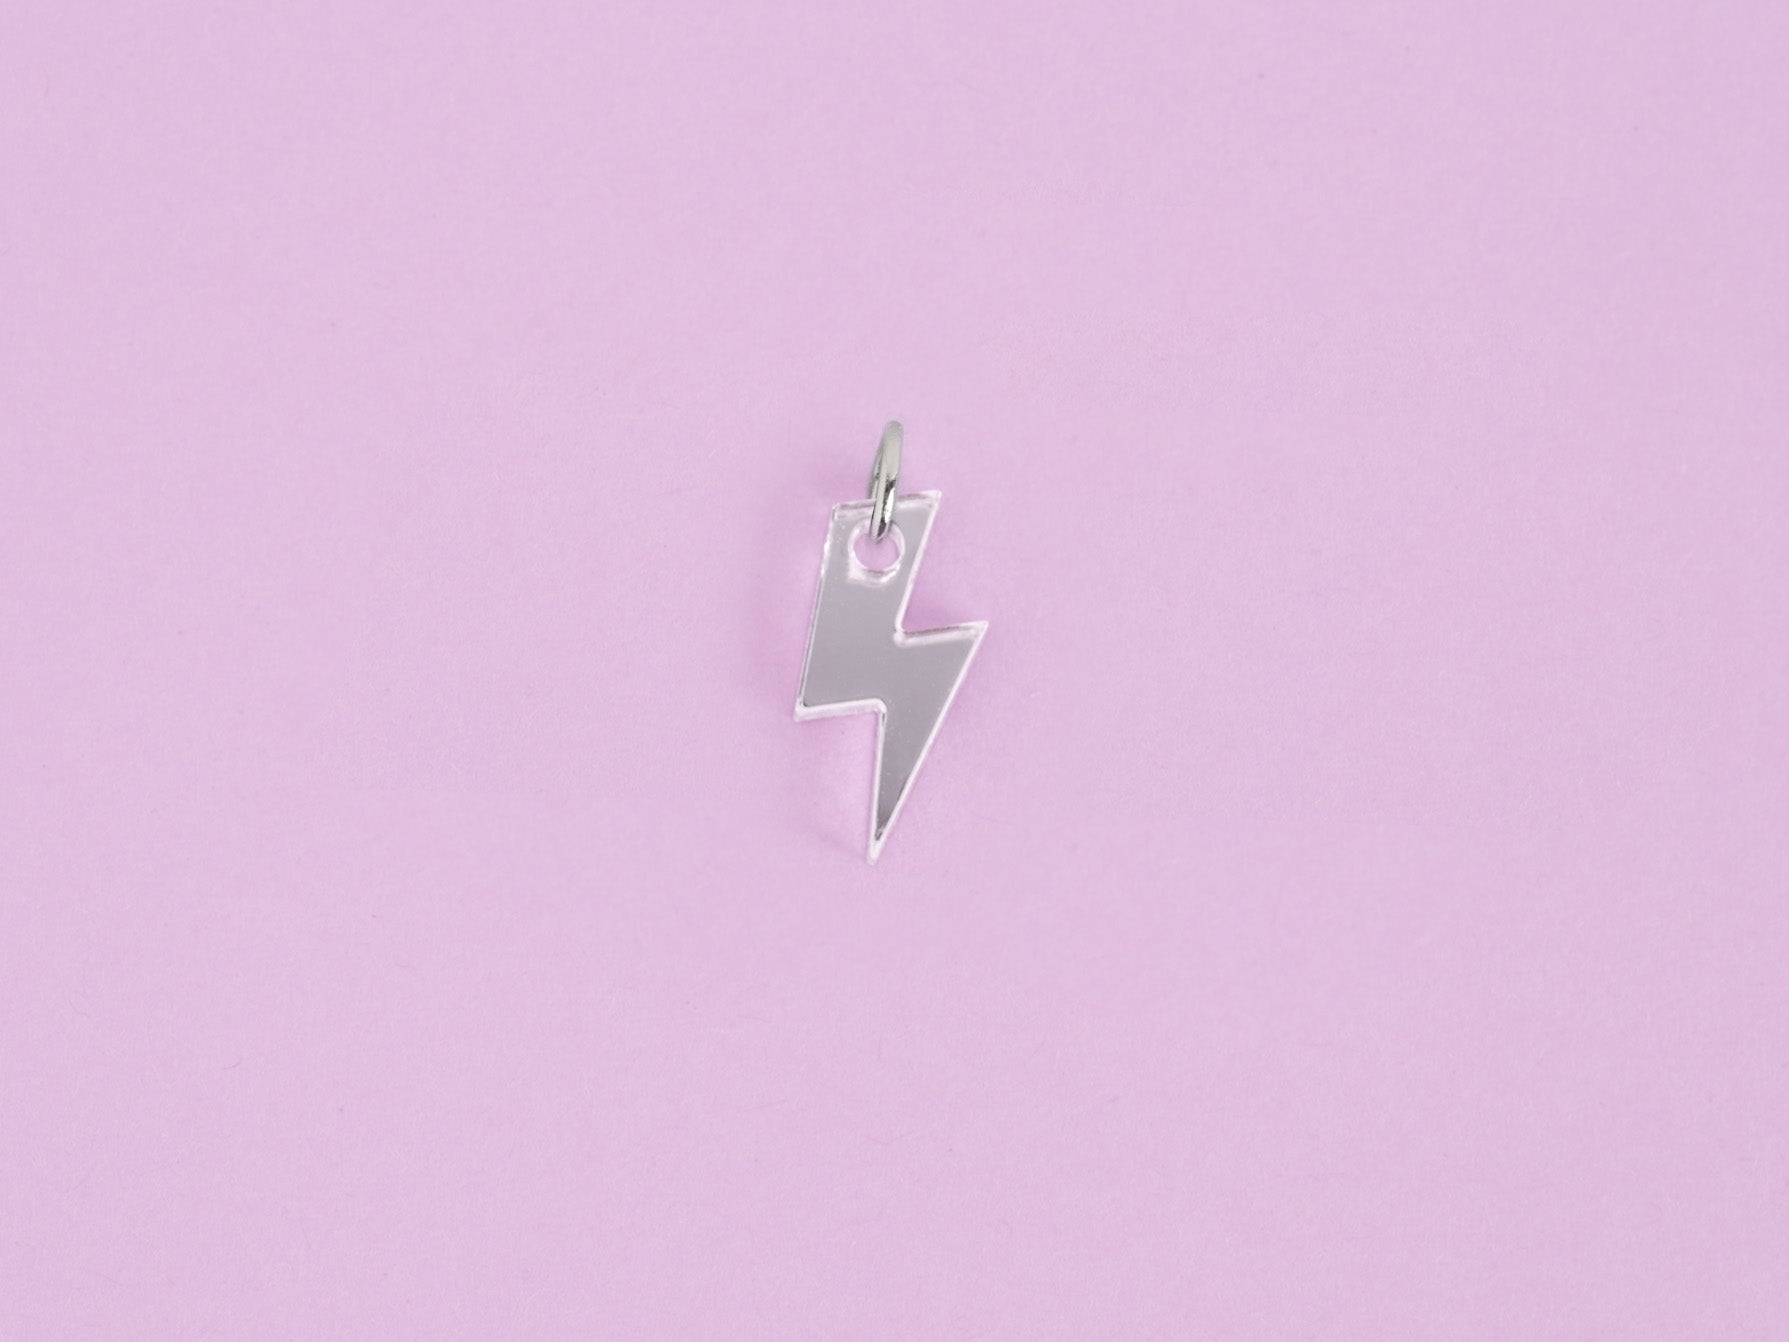 Single lightning bolt pendant